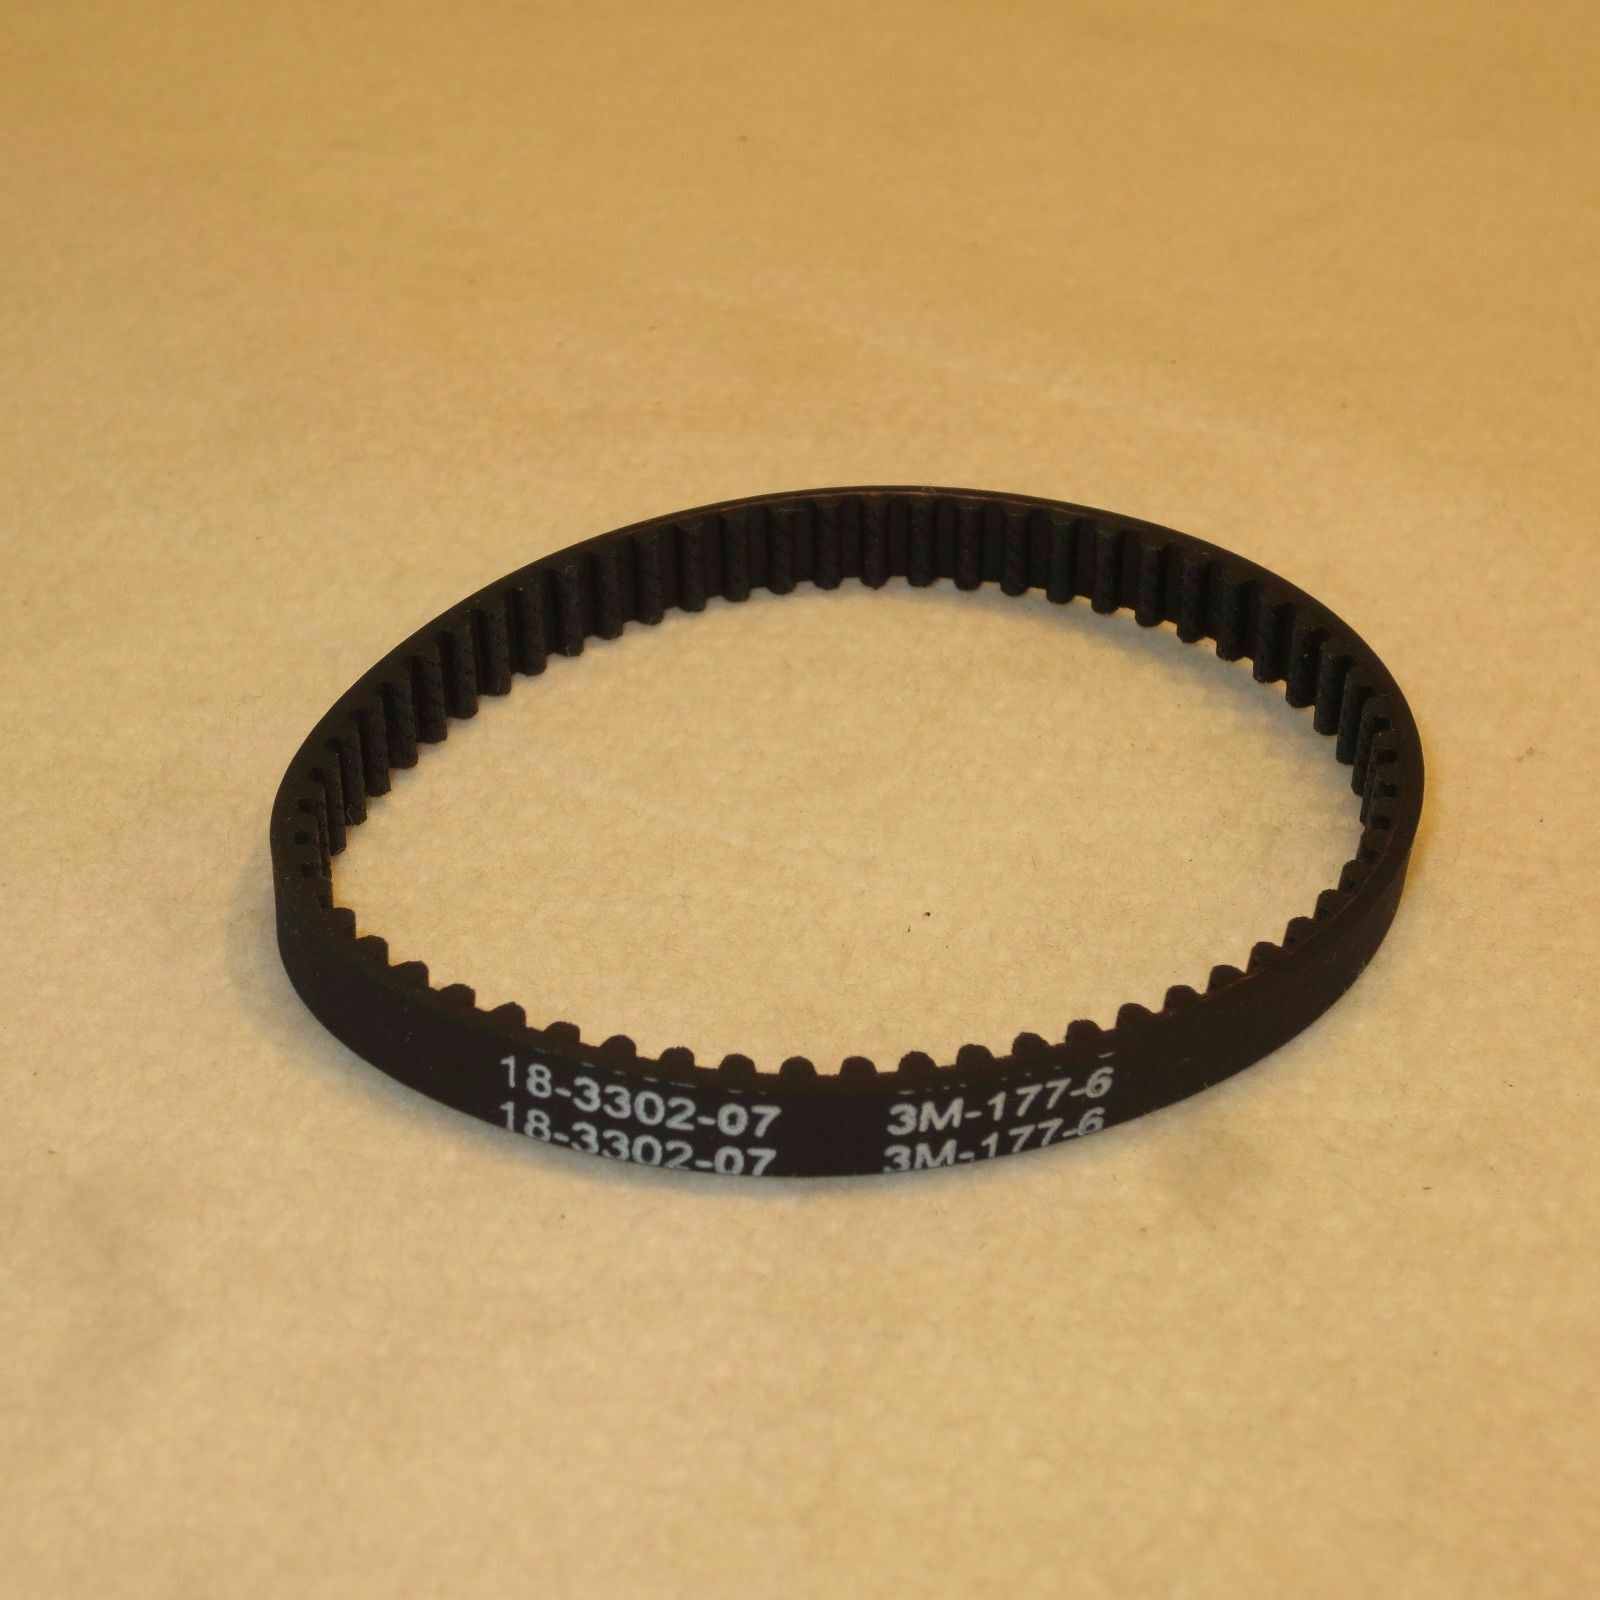 Bissell 2036688 Pro Heat 2X 8920 Left Side Geared Vacuum Cleaner Belts [2 Belts] - $7.84